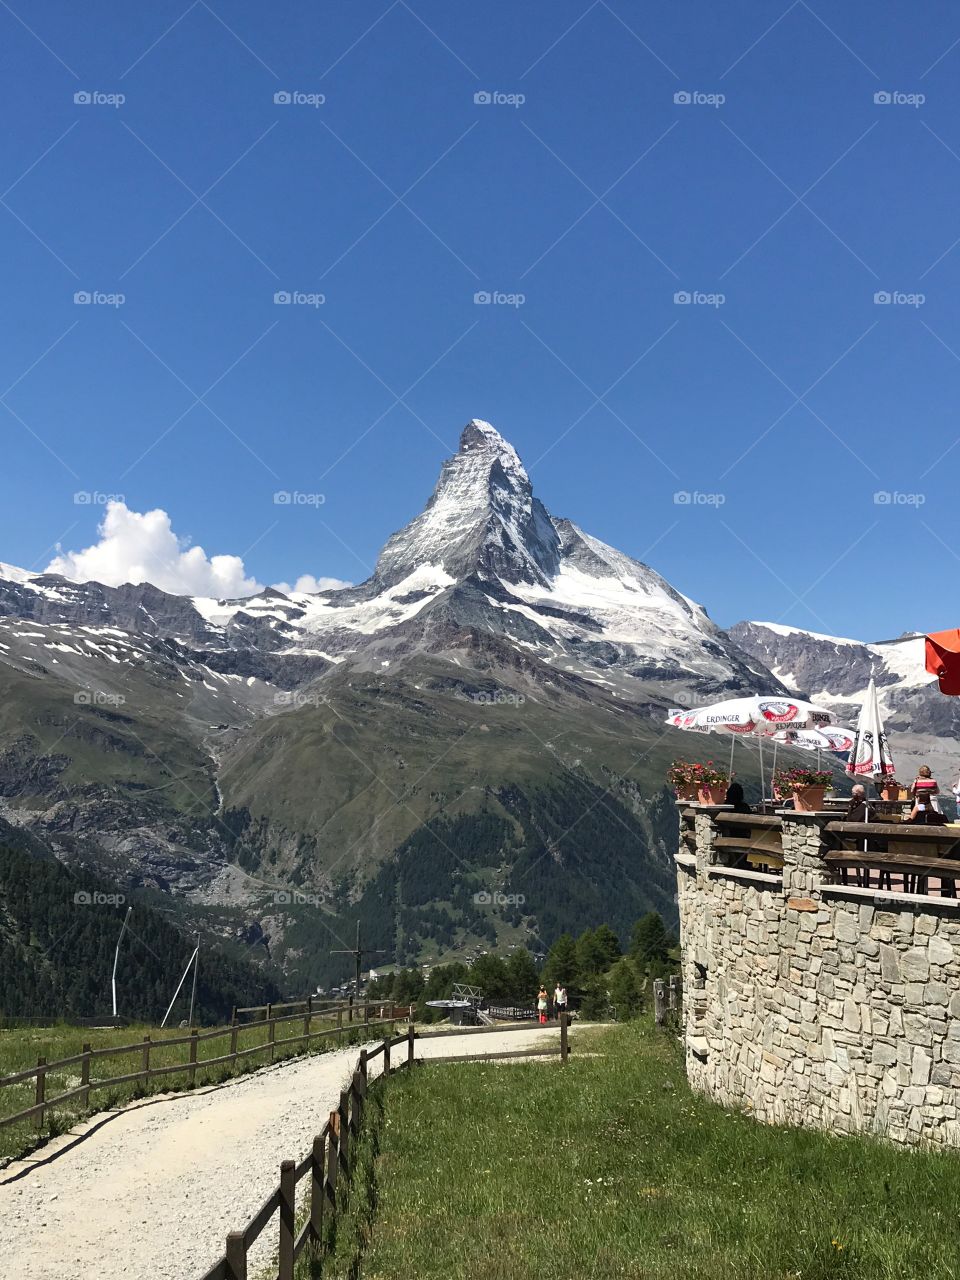 Just a photo I took of Matterhorn in Switzerland!